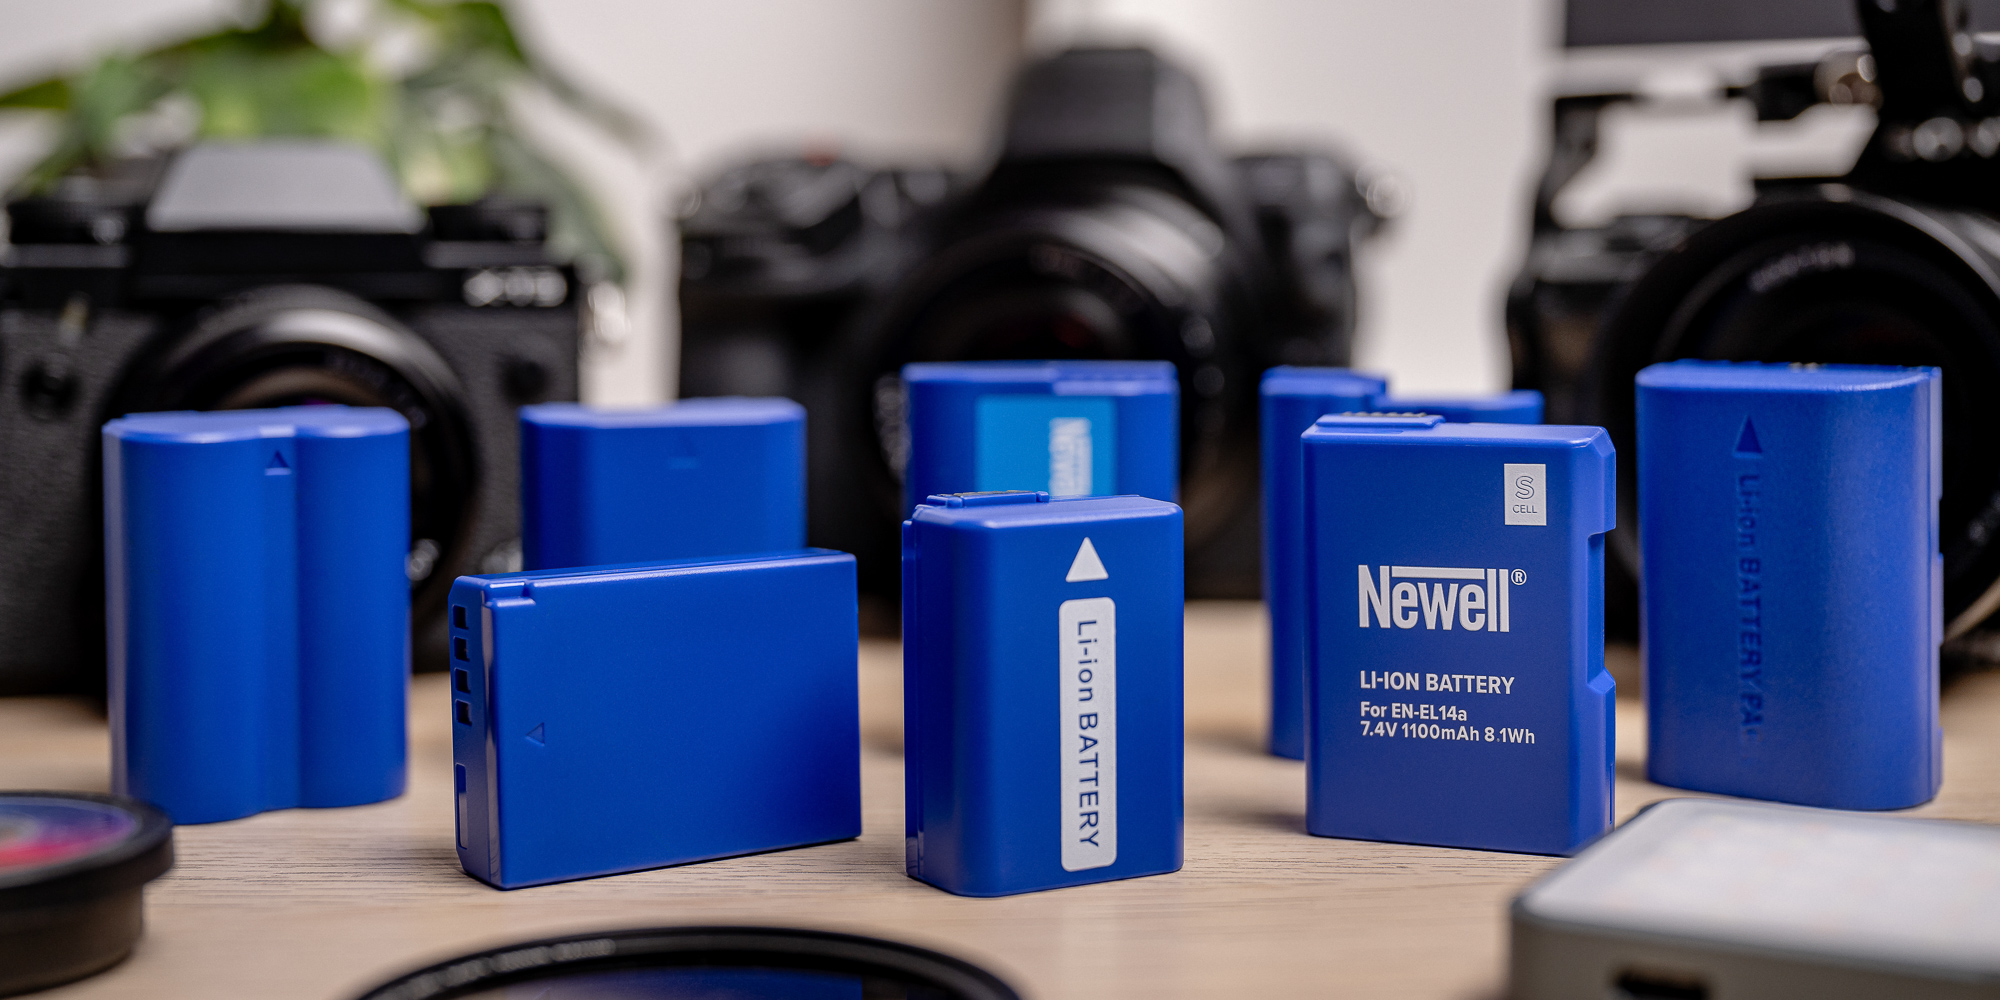 Newell SupraCell Protect NP-BX1 vervangende batterij voor Sony